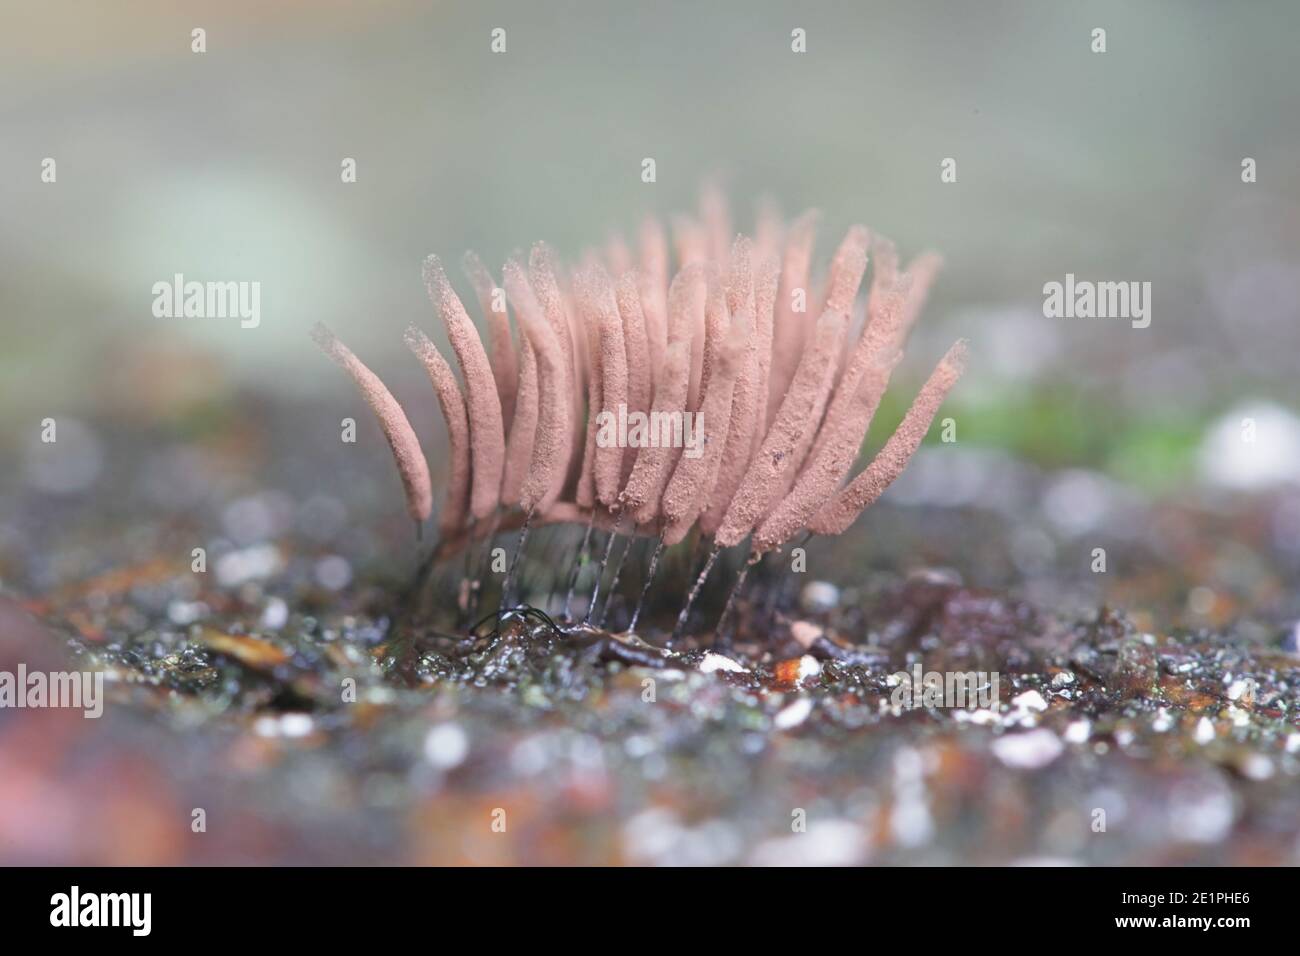 Stemonitis smithii, a tube slime mold from Finland with no common english name Stock Photo